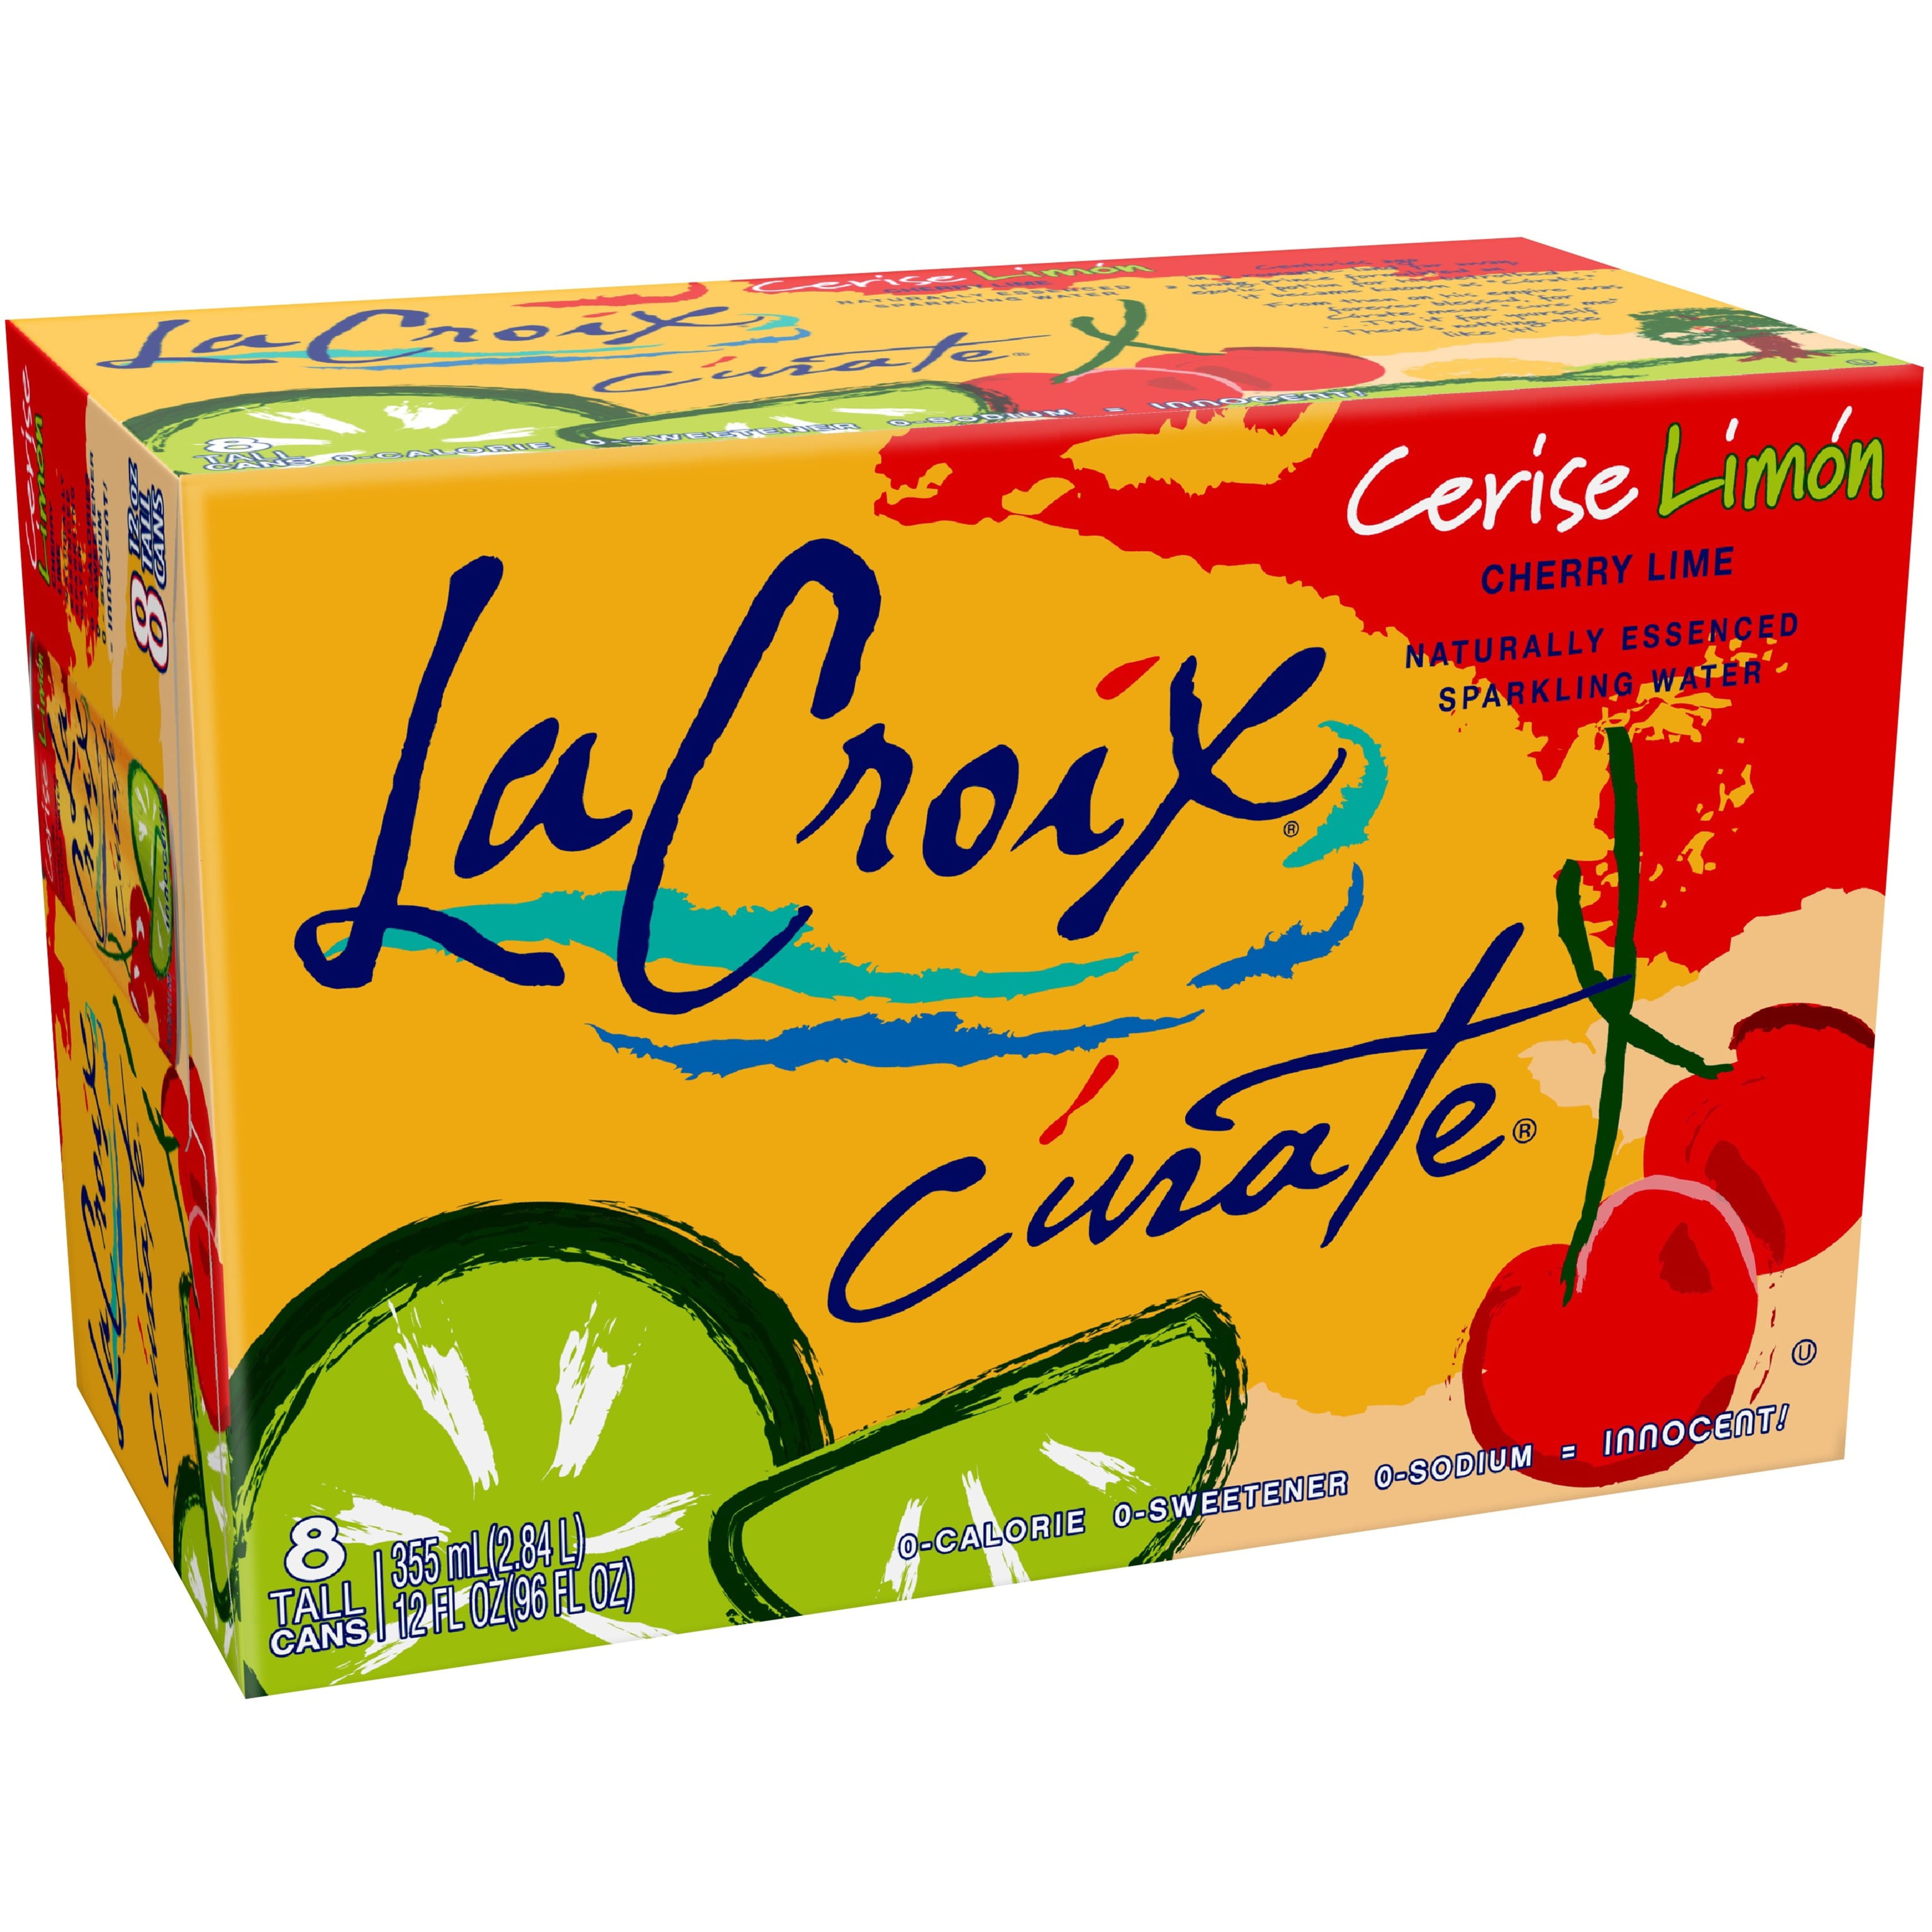 LaCroix Sparkling Water Curate, Cerise Limn (Cherry Lime) - 8pk/12 fl Oz Cans